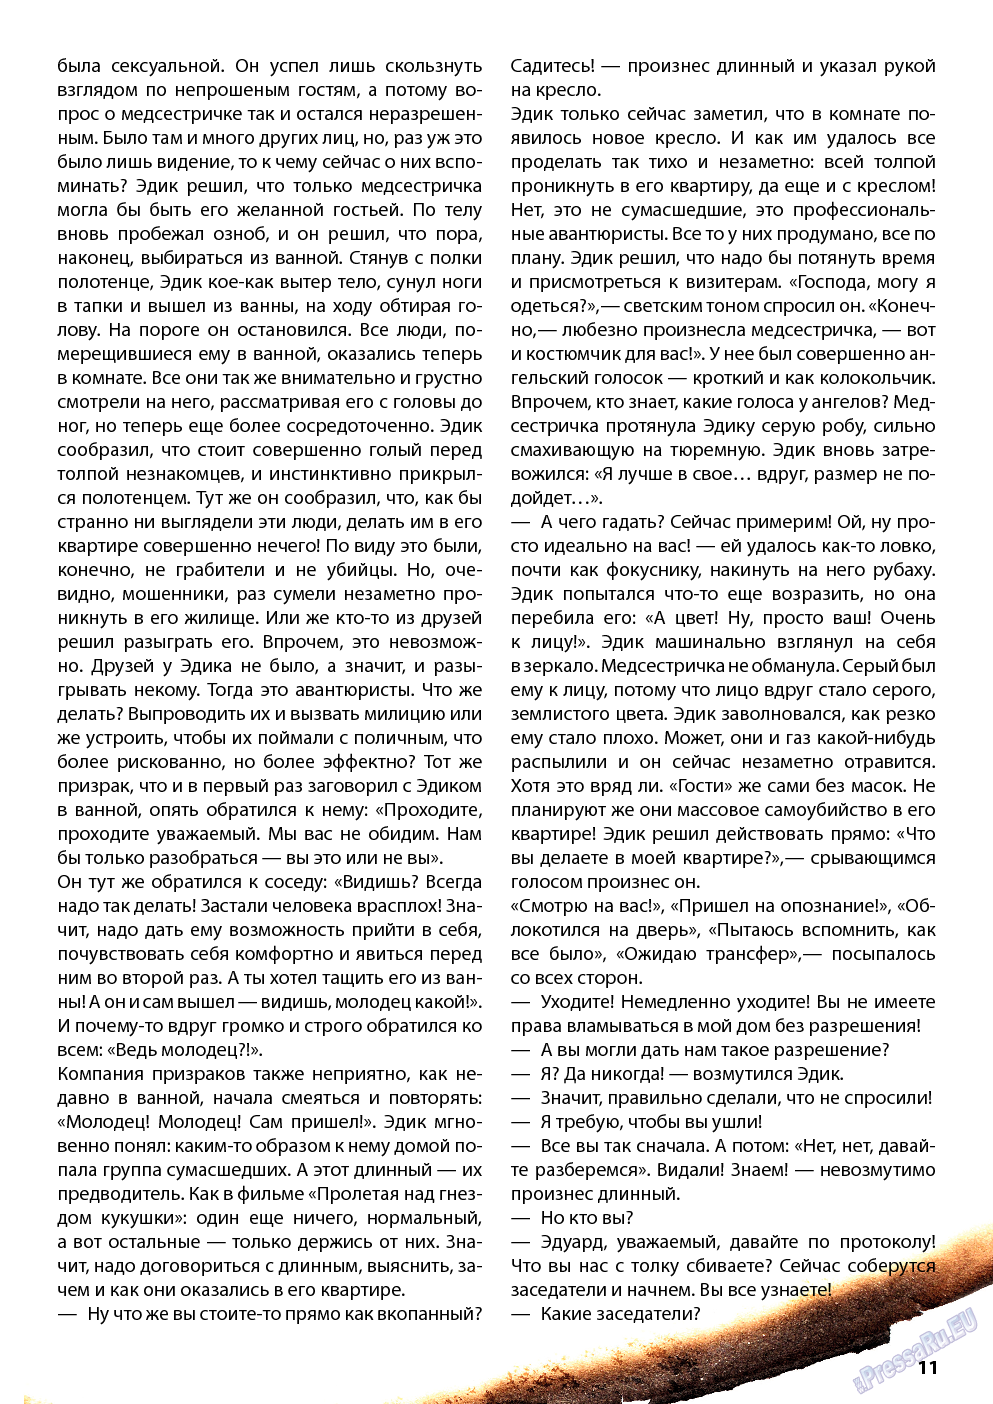 Wadim, журнал. 2013 №11 стр.11